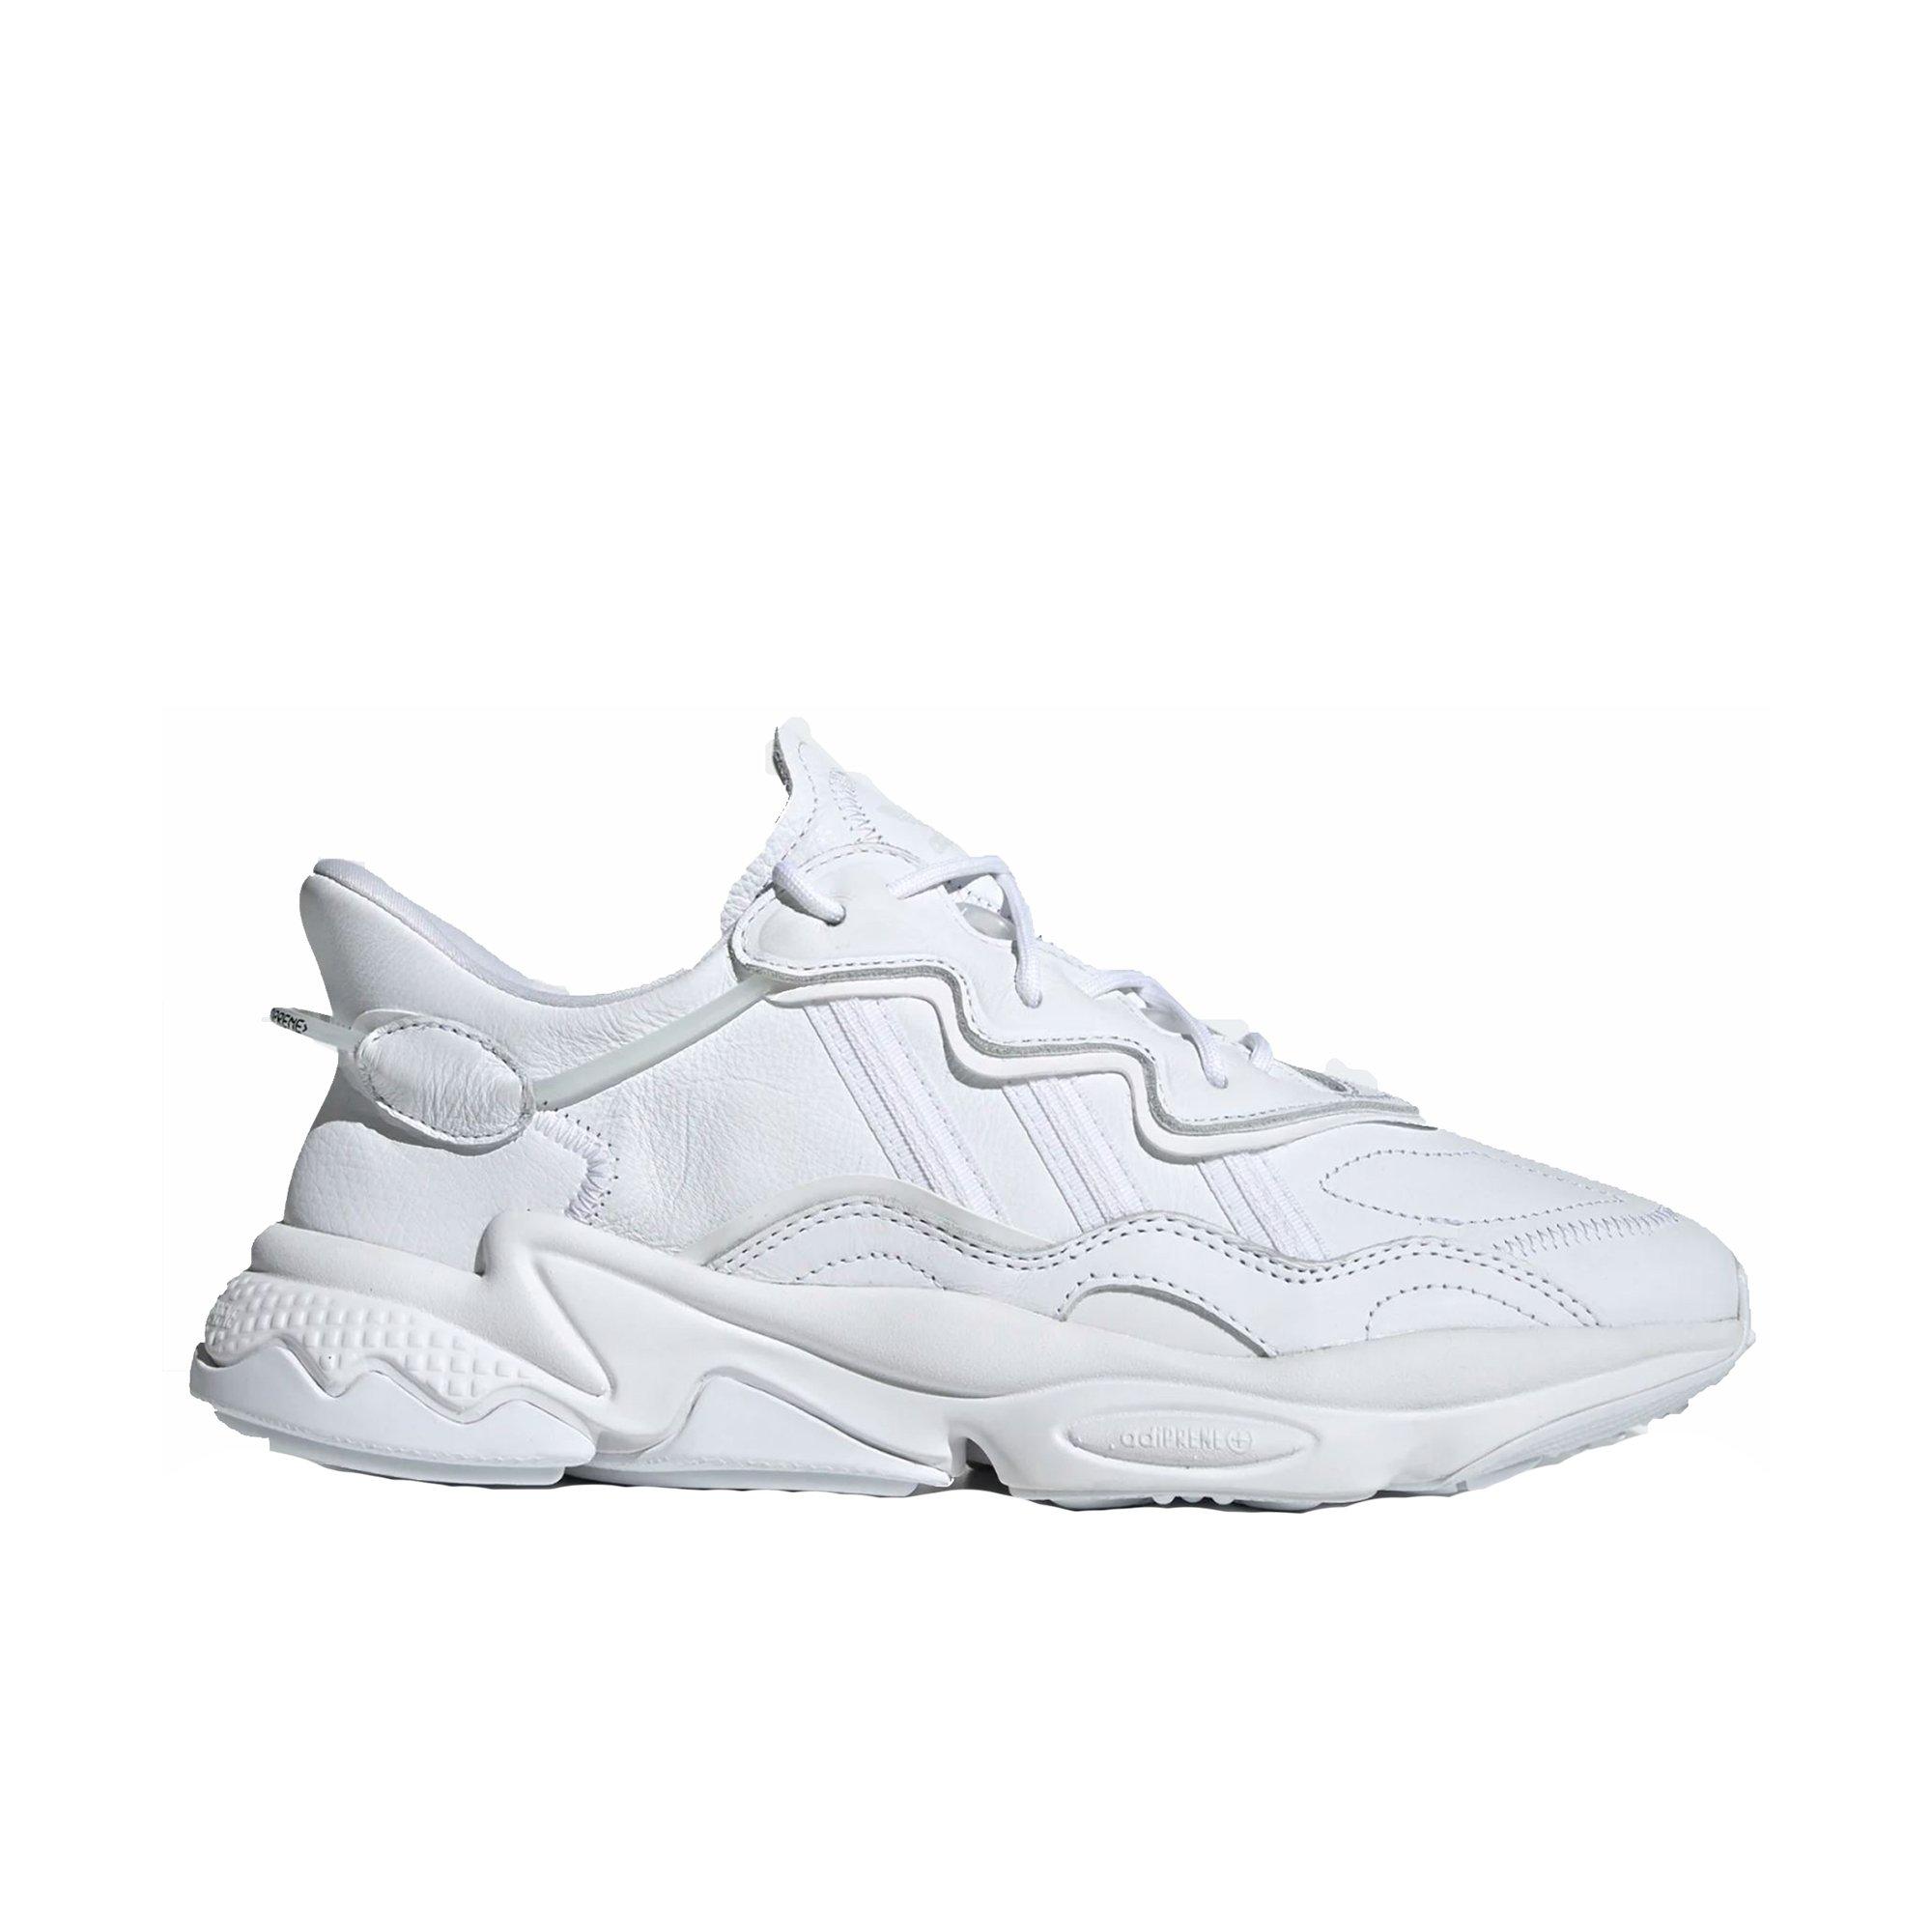 cloud white ozweego shoes